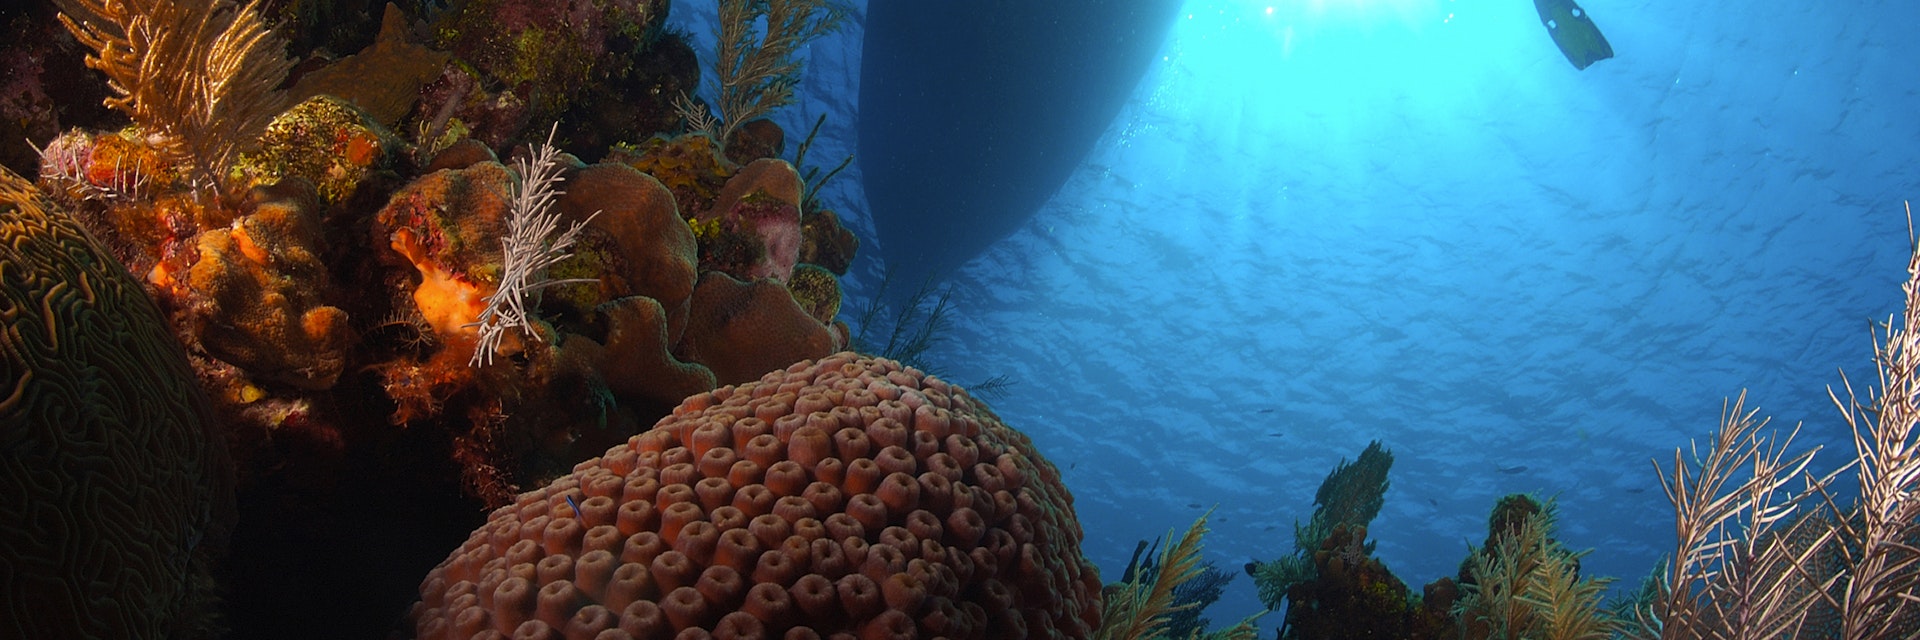 Diver over Coral Reef, Utila, Caribbean Sea, Honduras